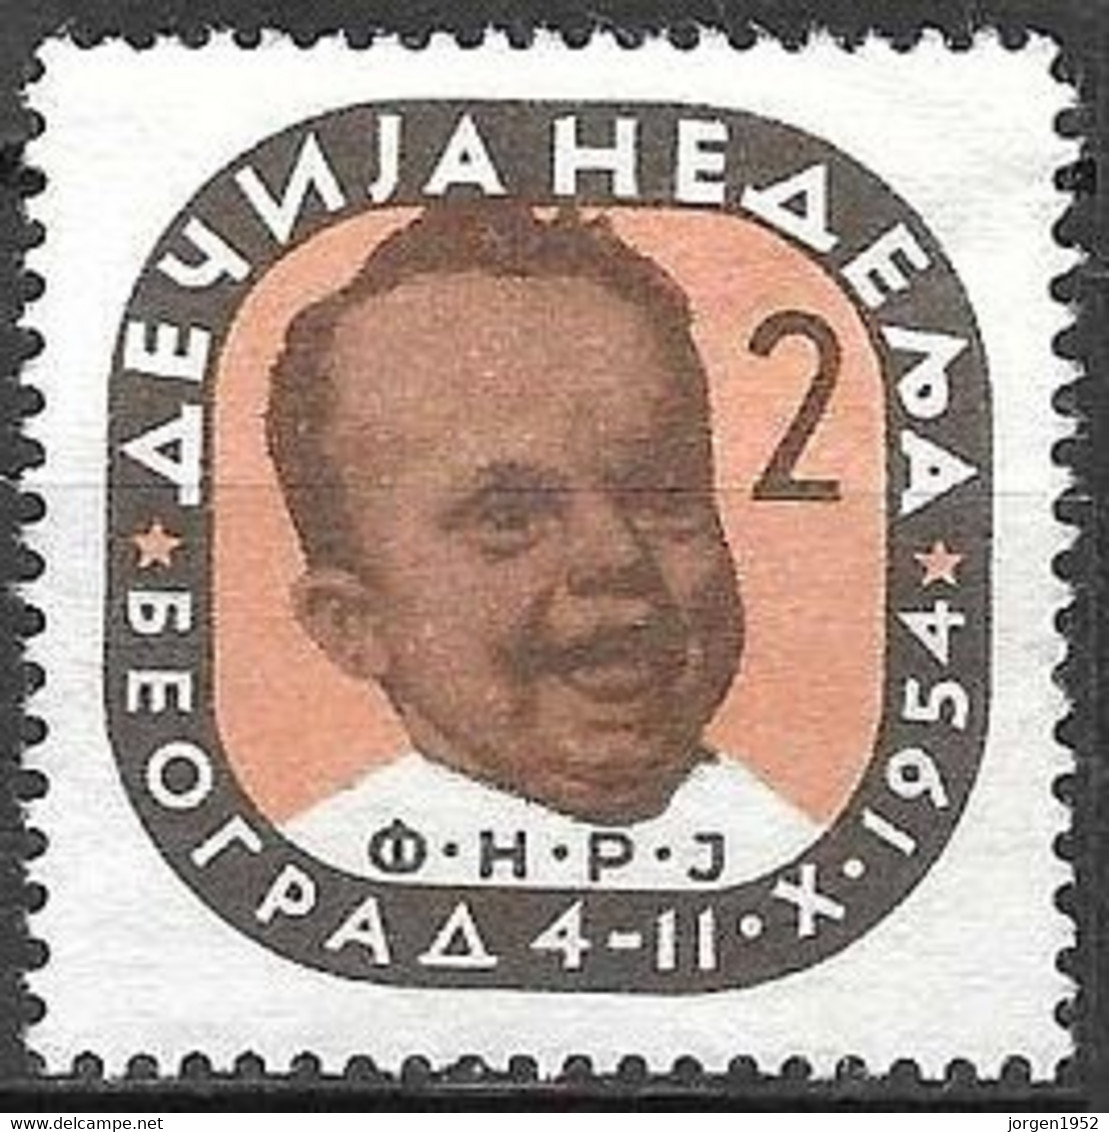 YUGOSLAVIA #  FROM 1954 MICHEL Z12 - Timbres-taxe